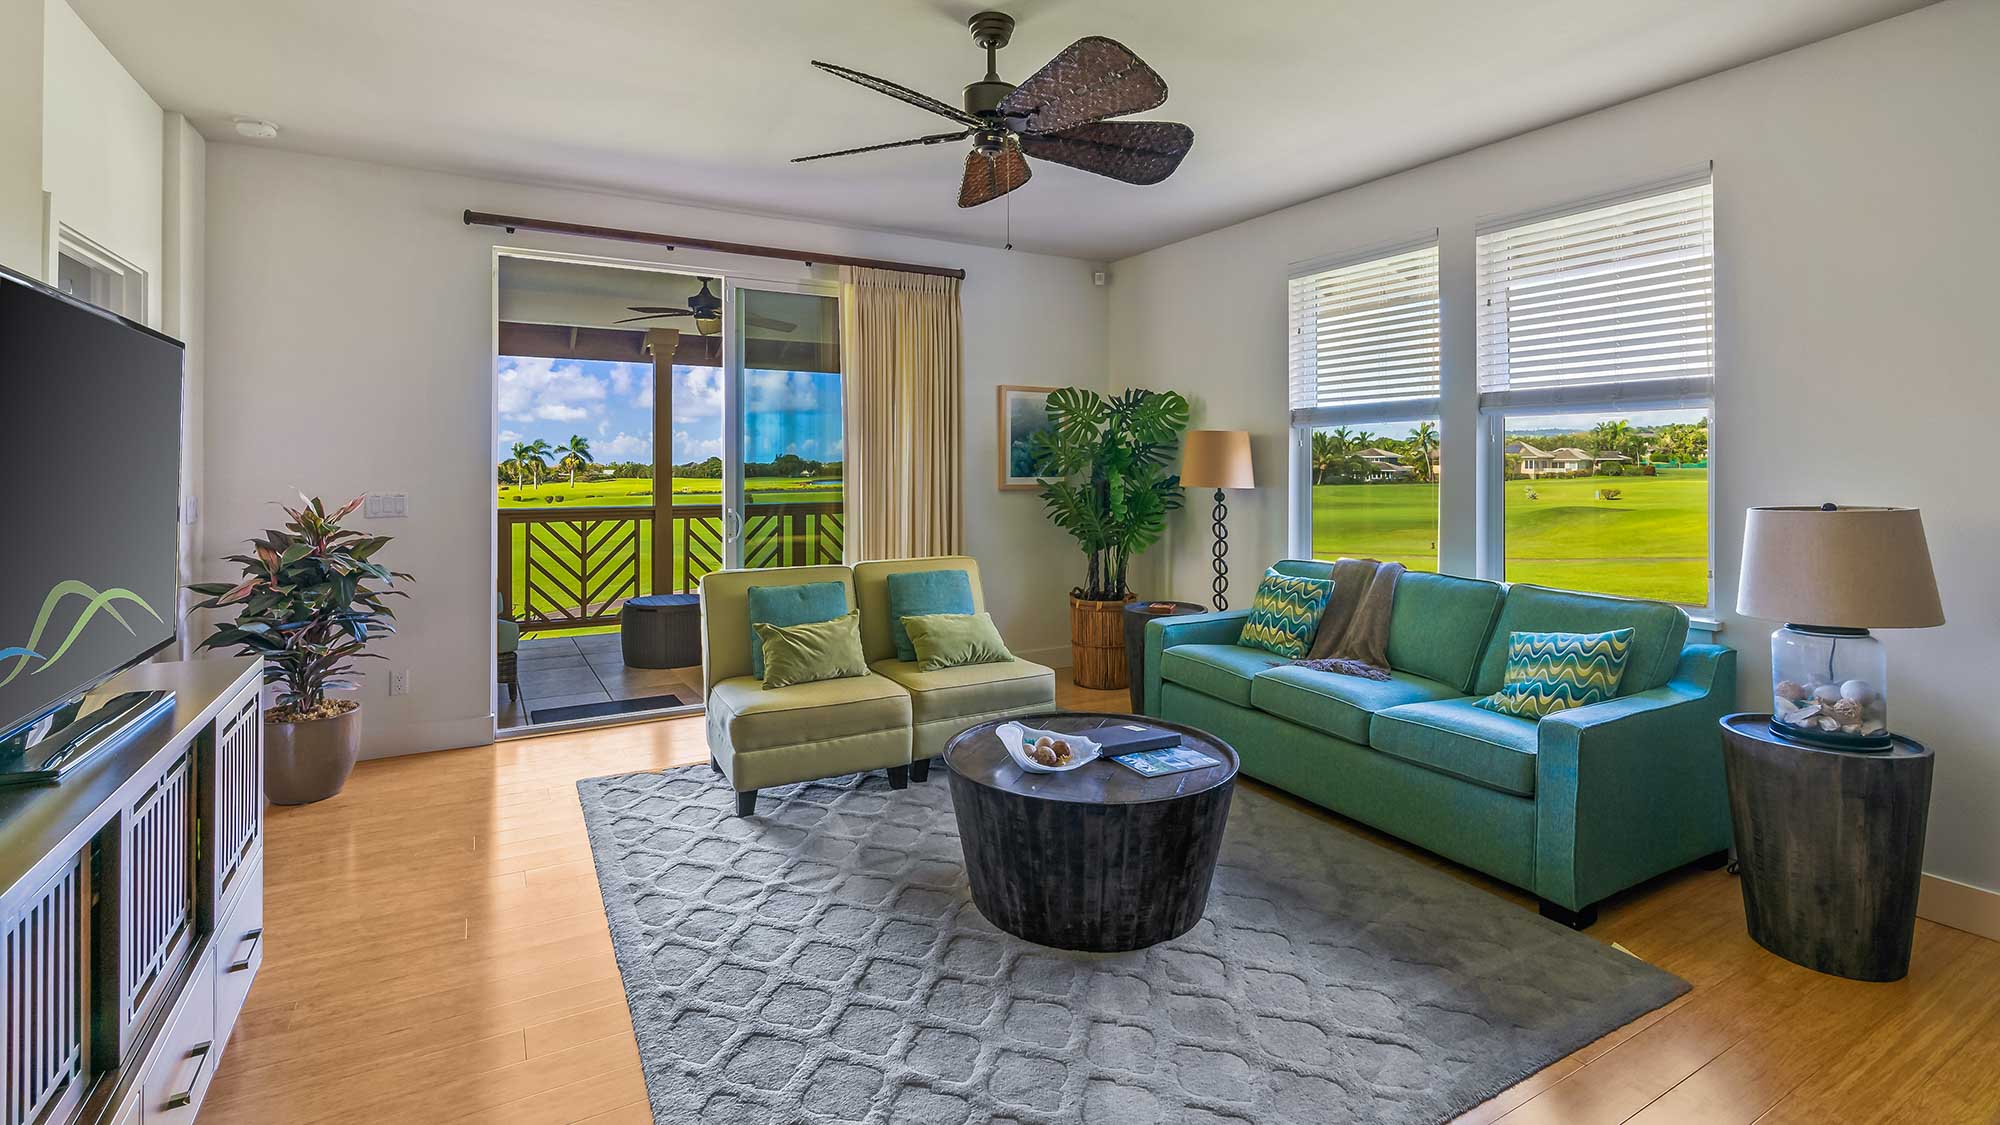 Pili Mai Resort at Poipu #10K - Living Room & Lanai View - Parrish Kauai